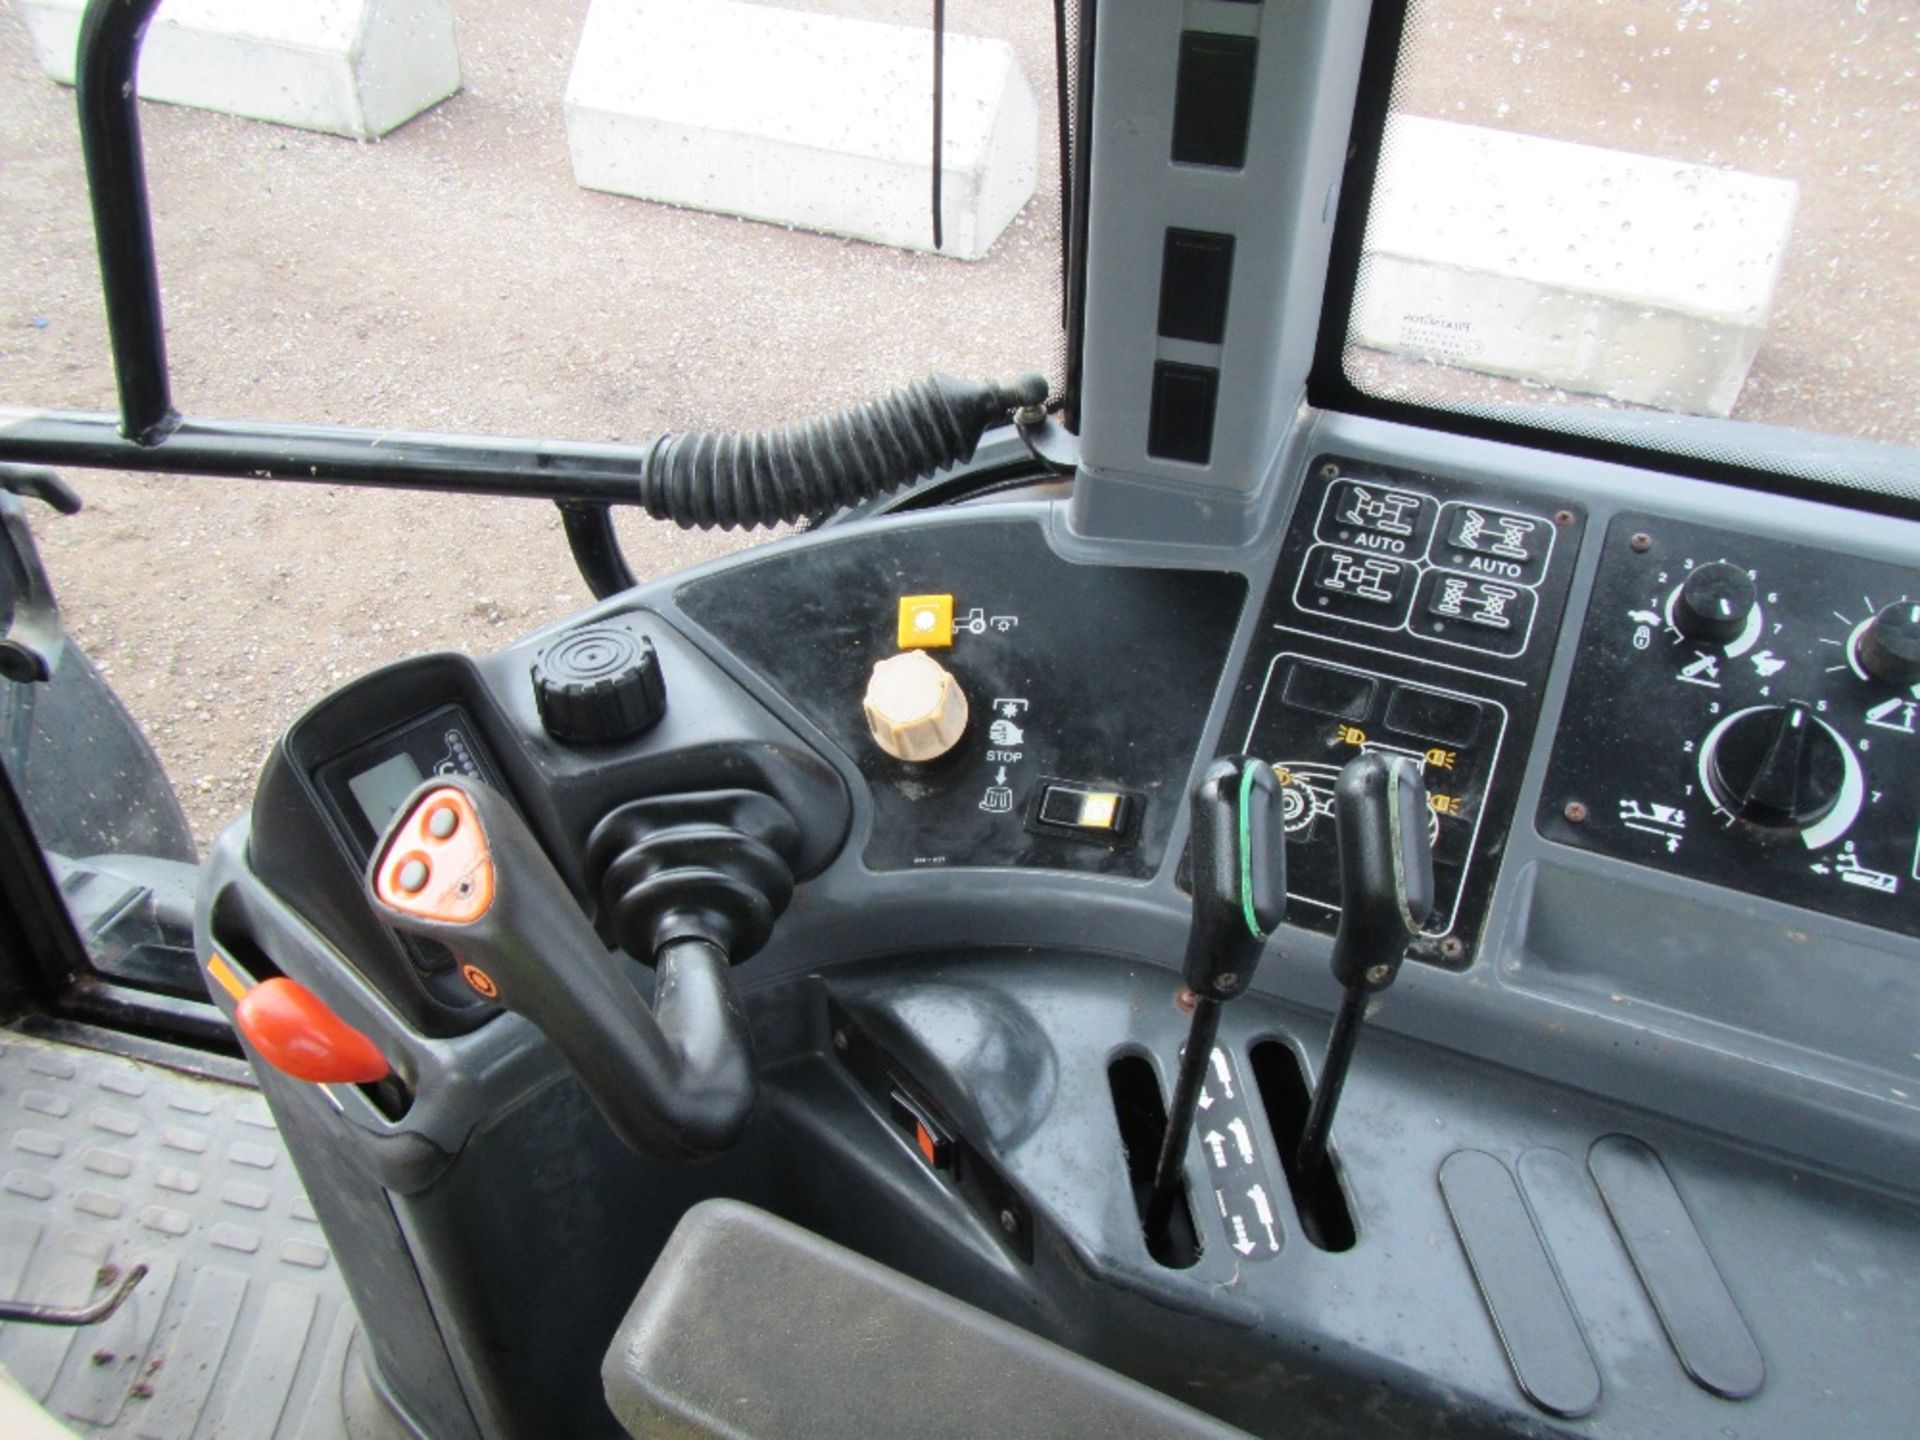 New Holland 8360 Range Command Tractor 7897 hrs. Reg. No. P363 BRU Ser No 055259B - Image 14 of 17